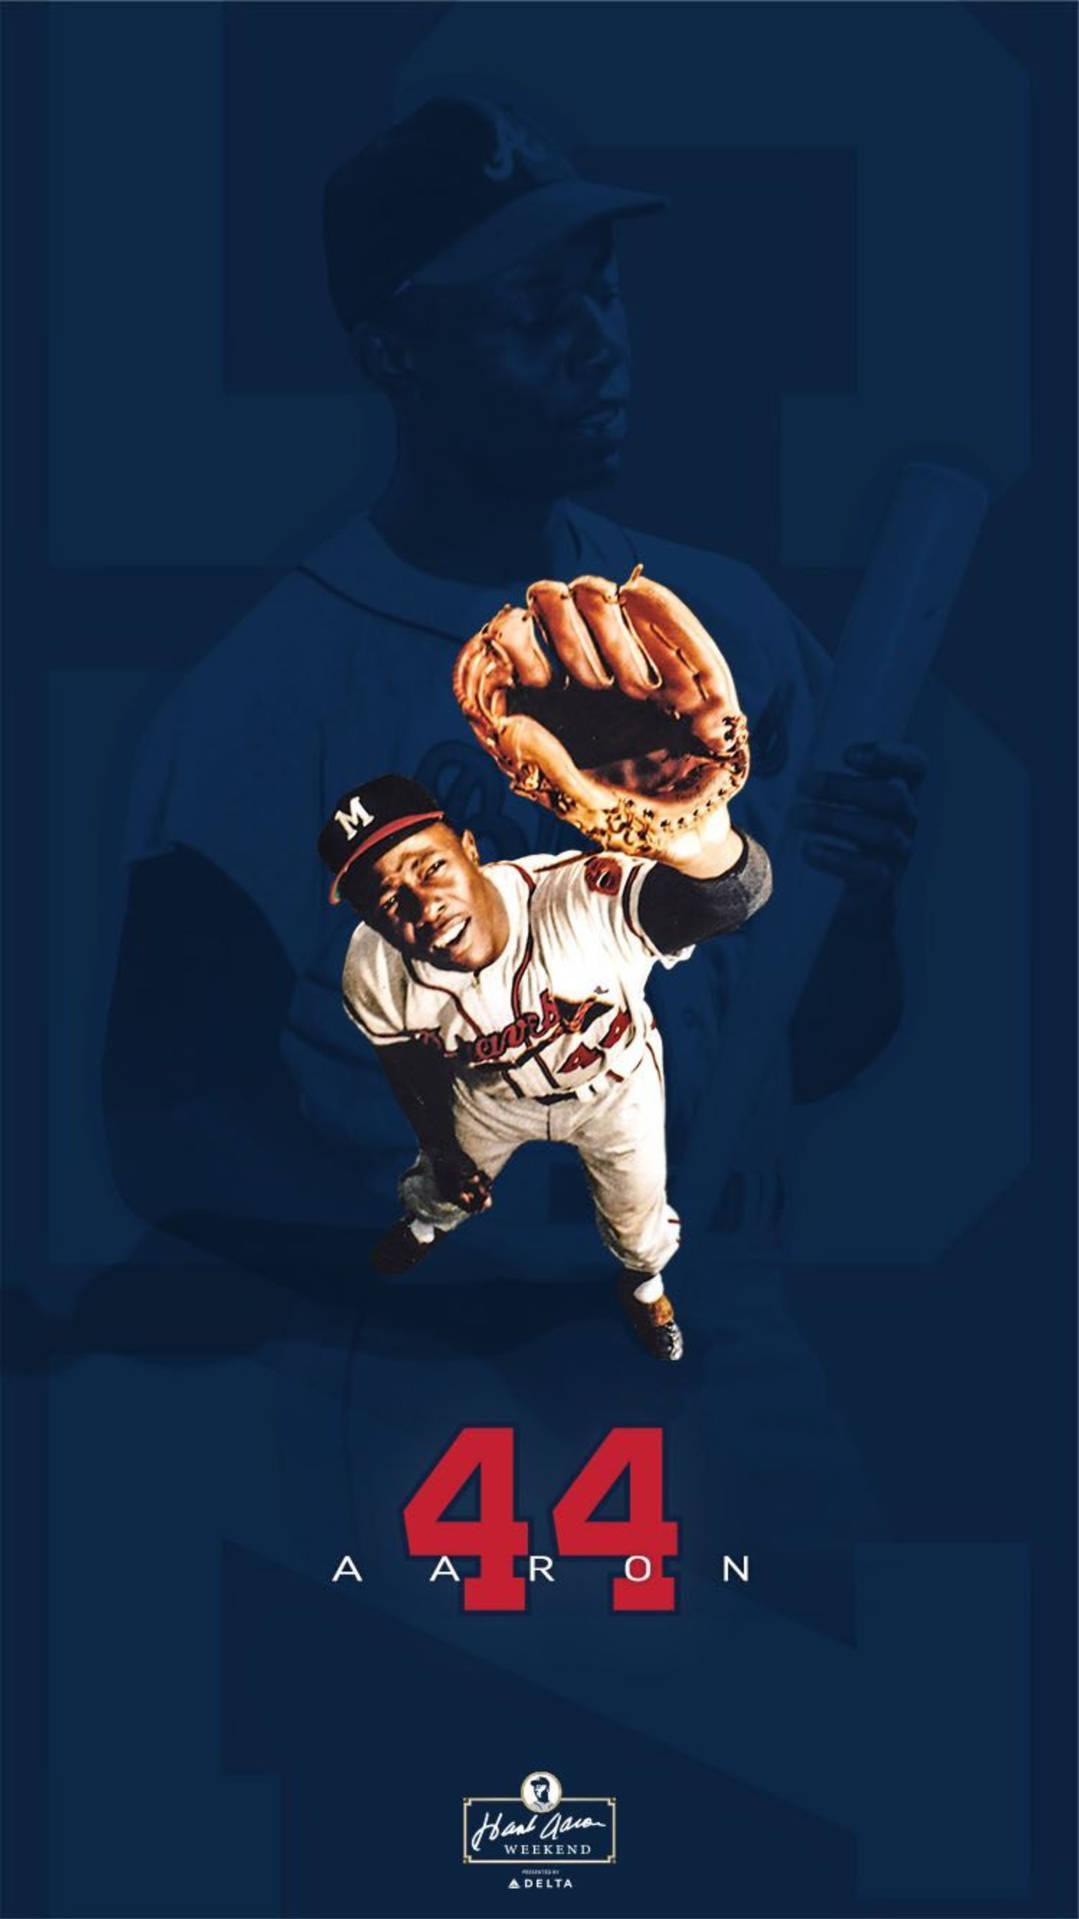 Hank Aaron Baseball Player Wallpaper